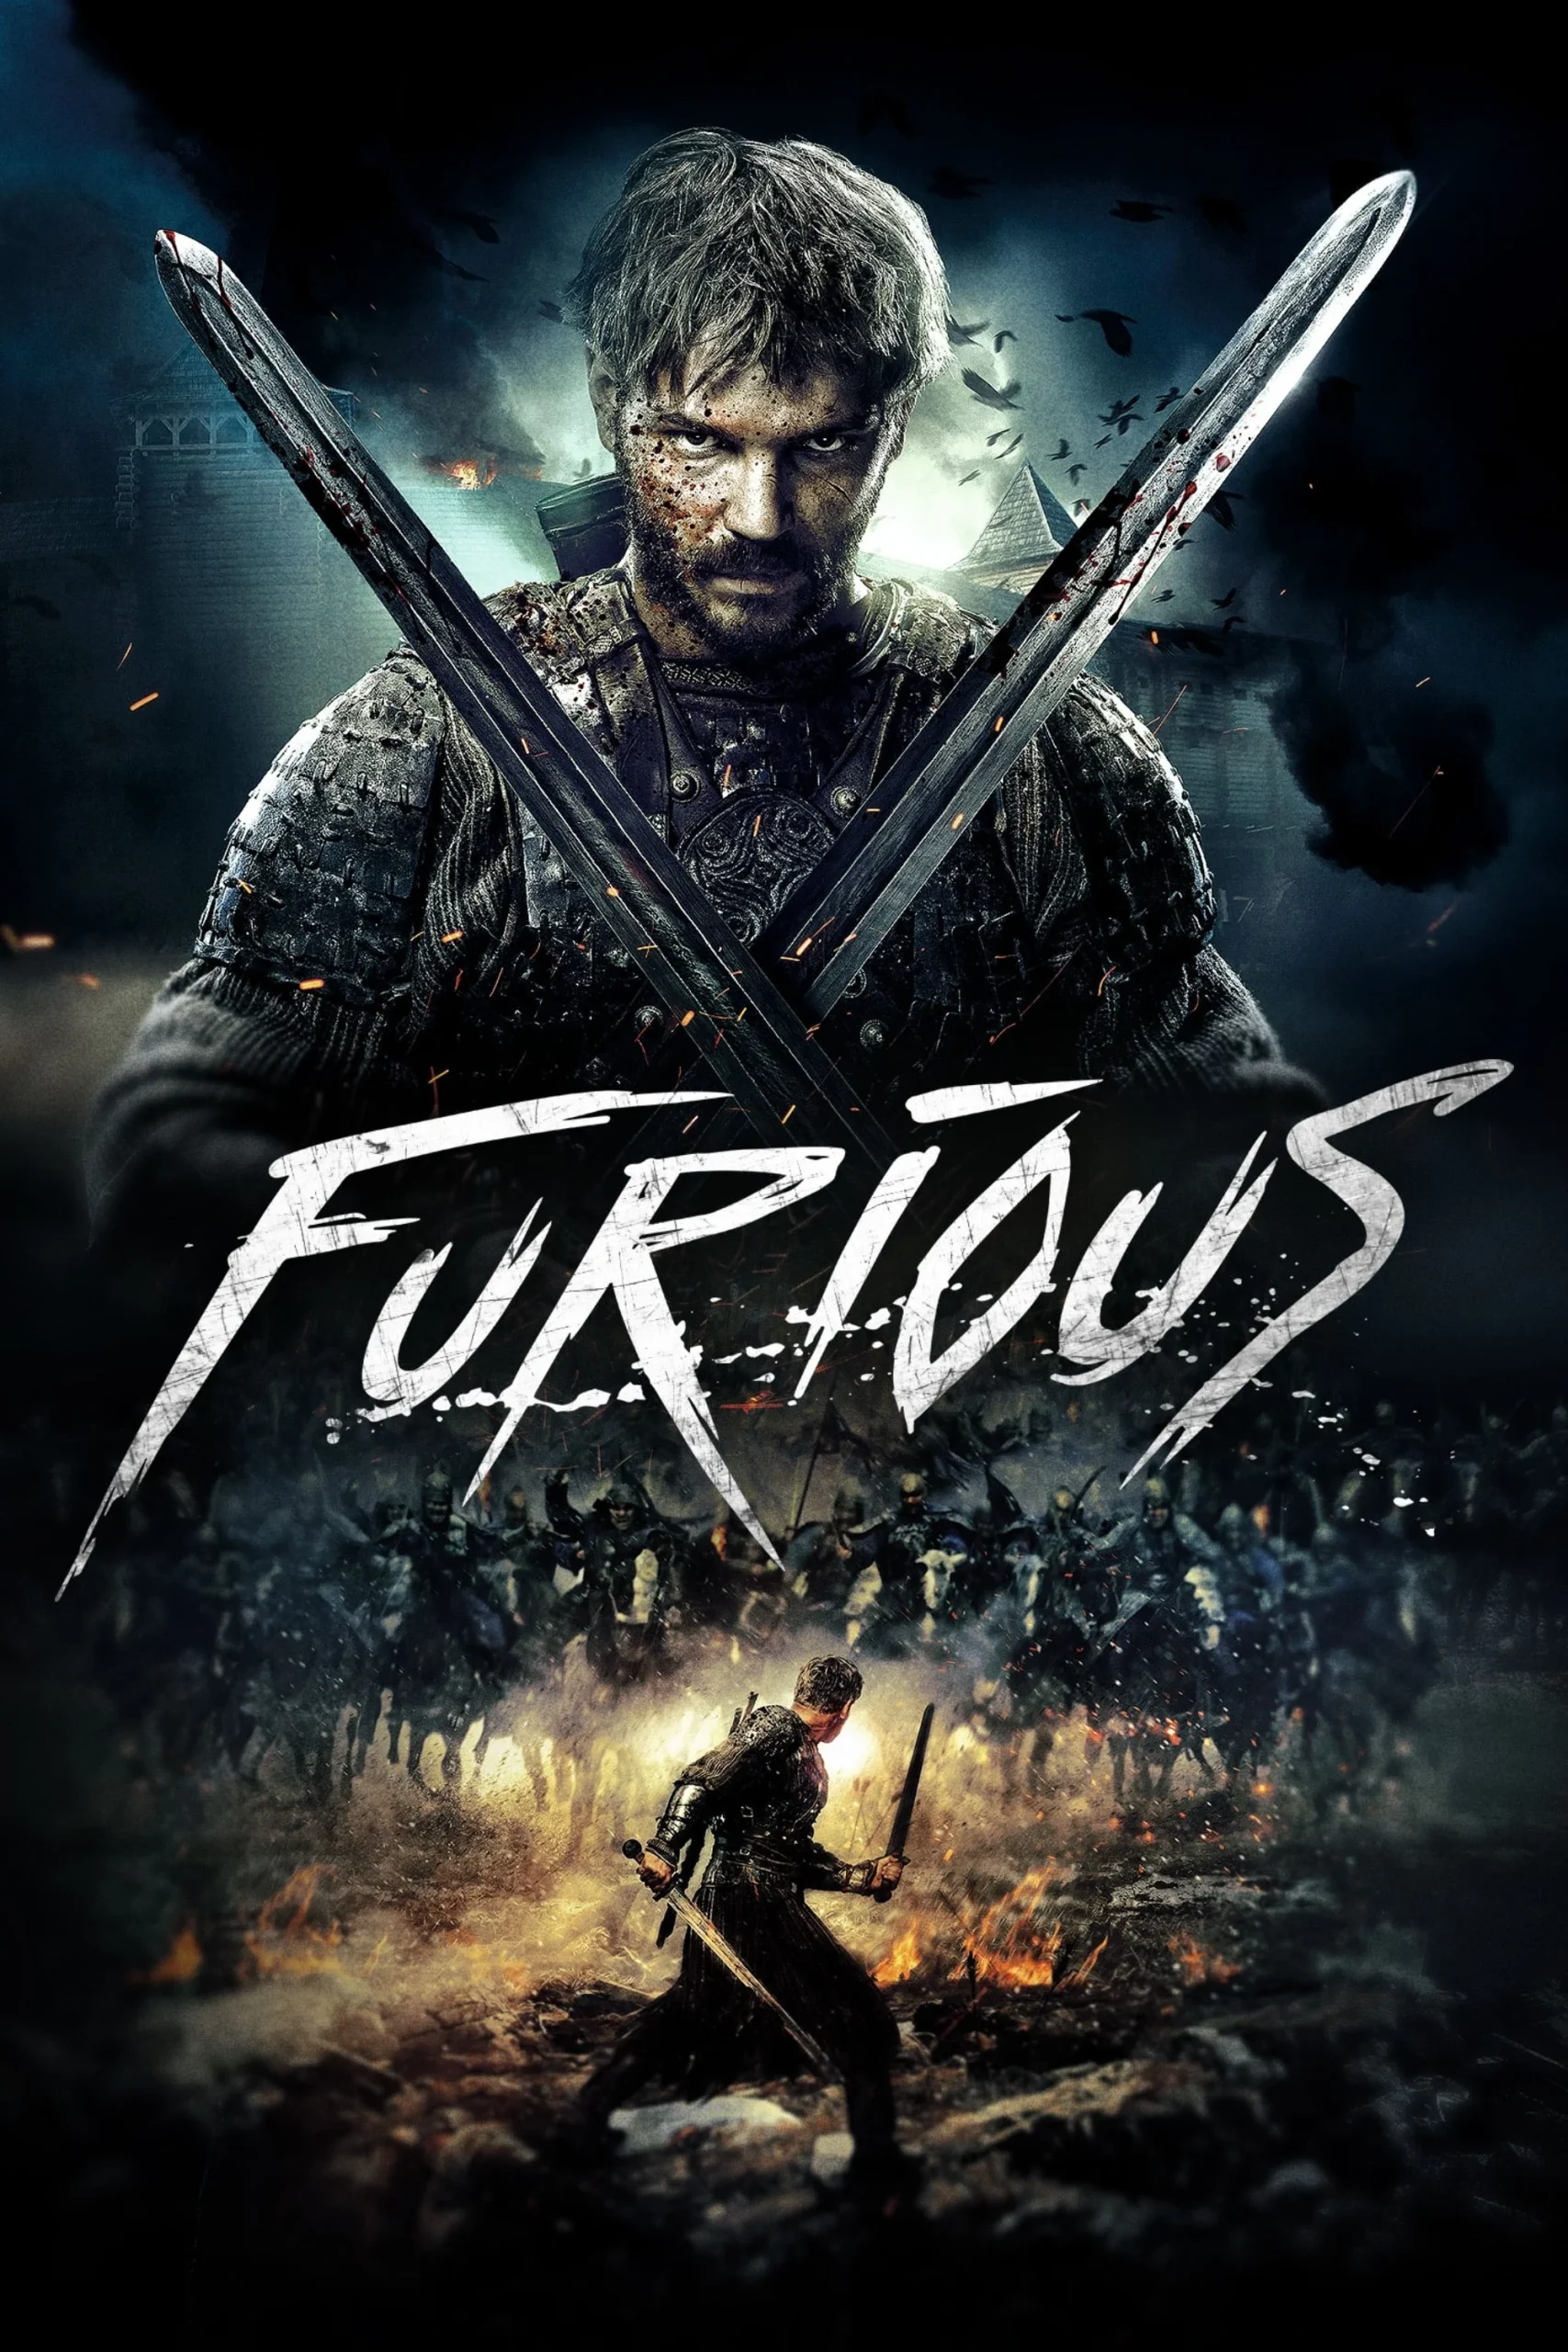 Furious [HD] (2017)